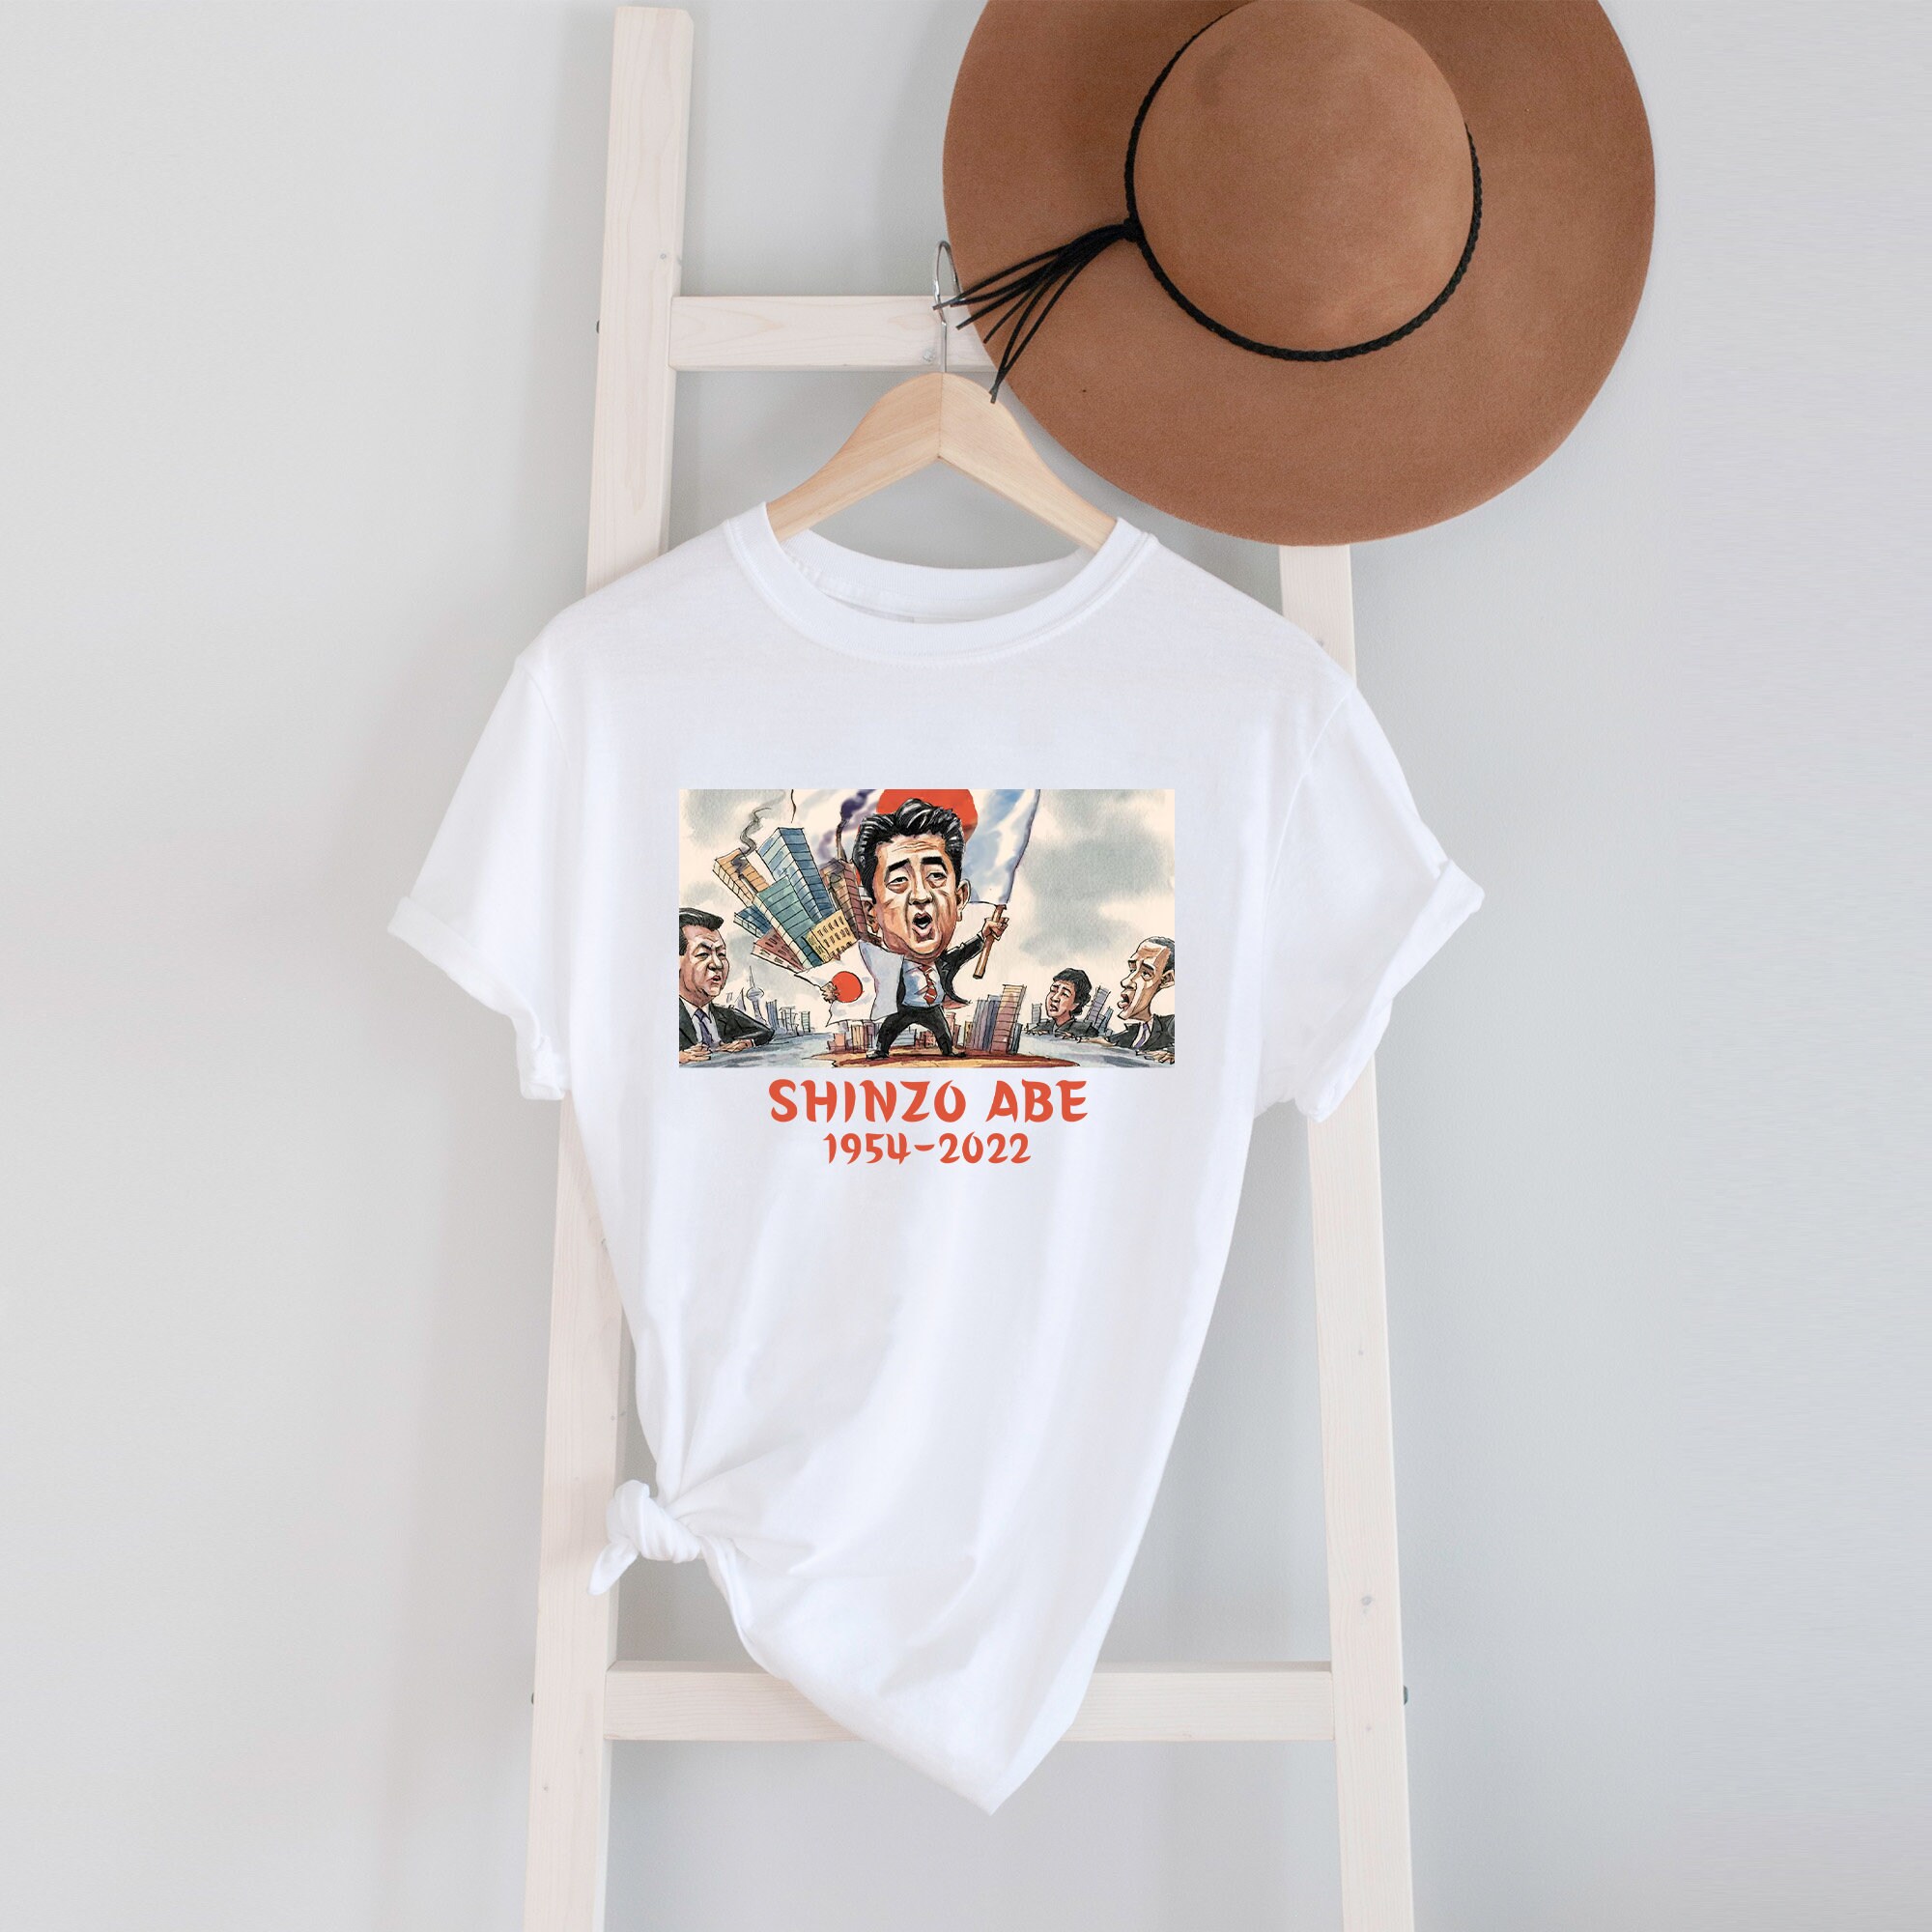 Discover Shinzo Abe Shirt, Japan ex-PM injured Tee Shirt